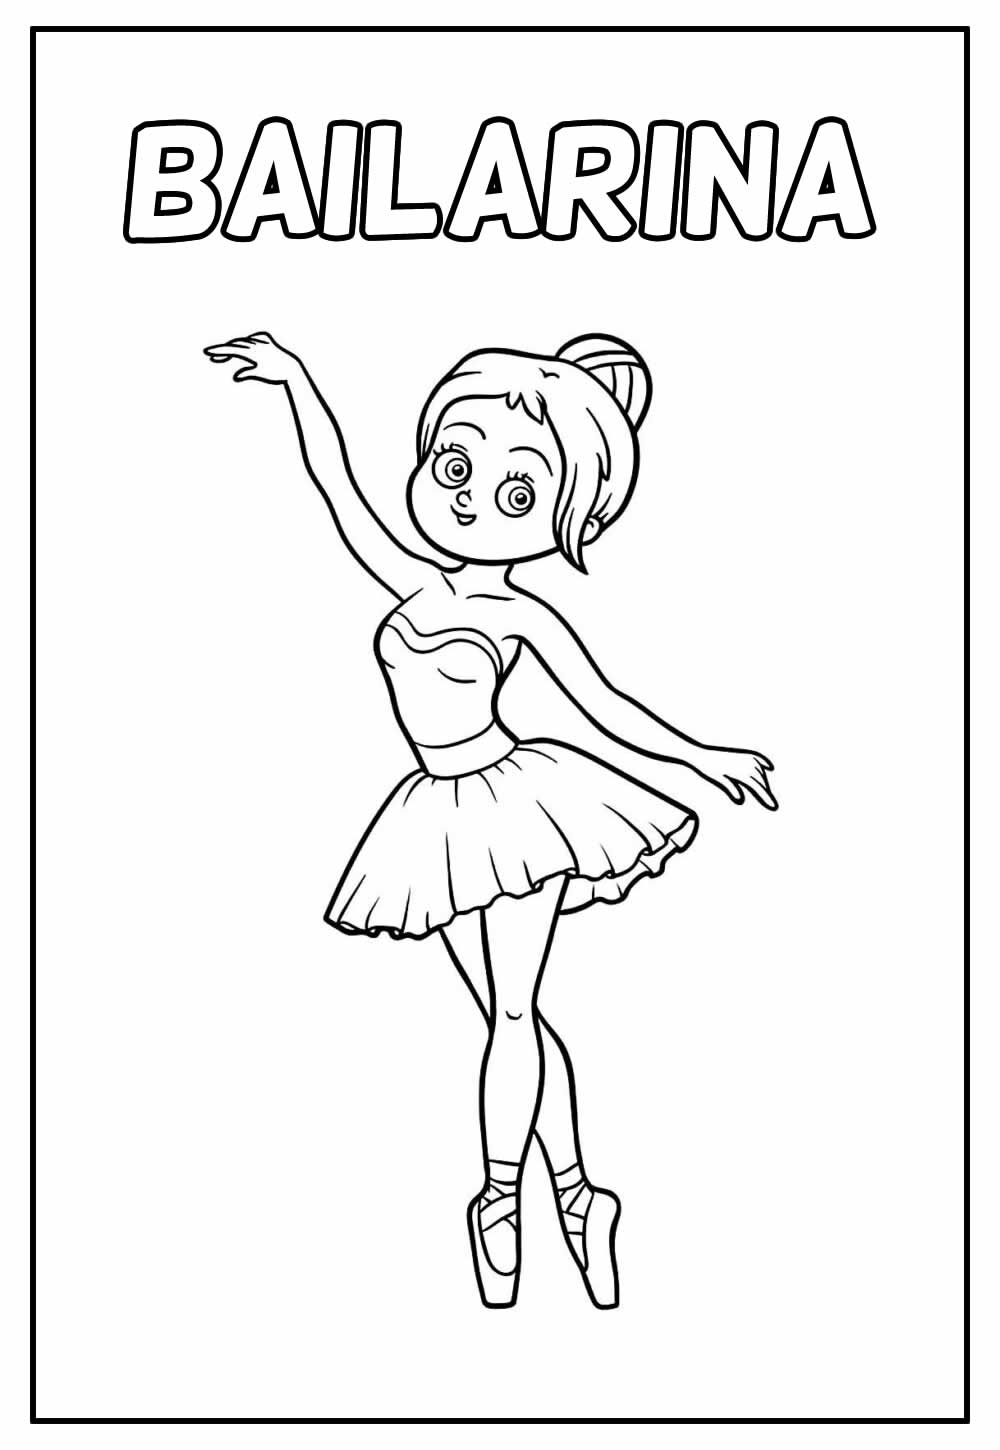 Desenho Educativo de Bailarina para colorir